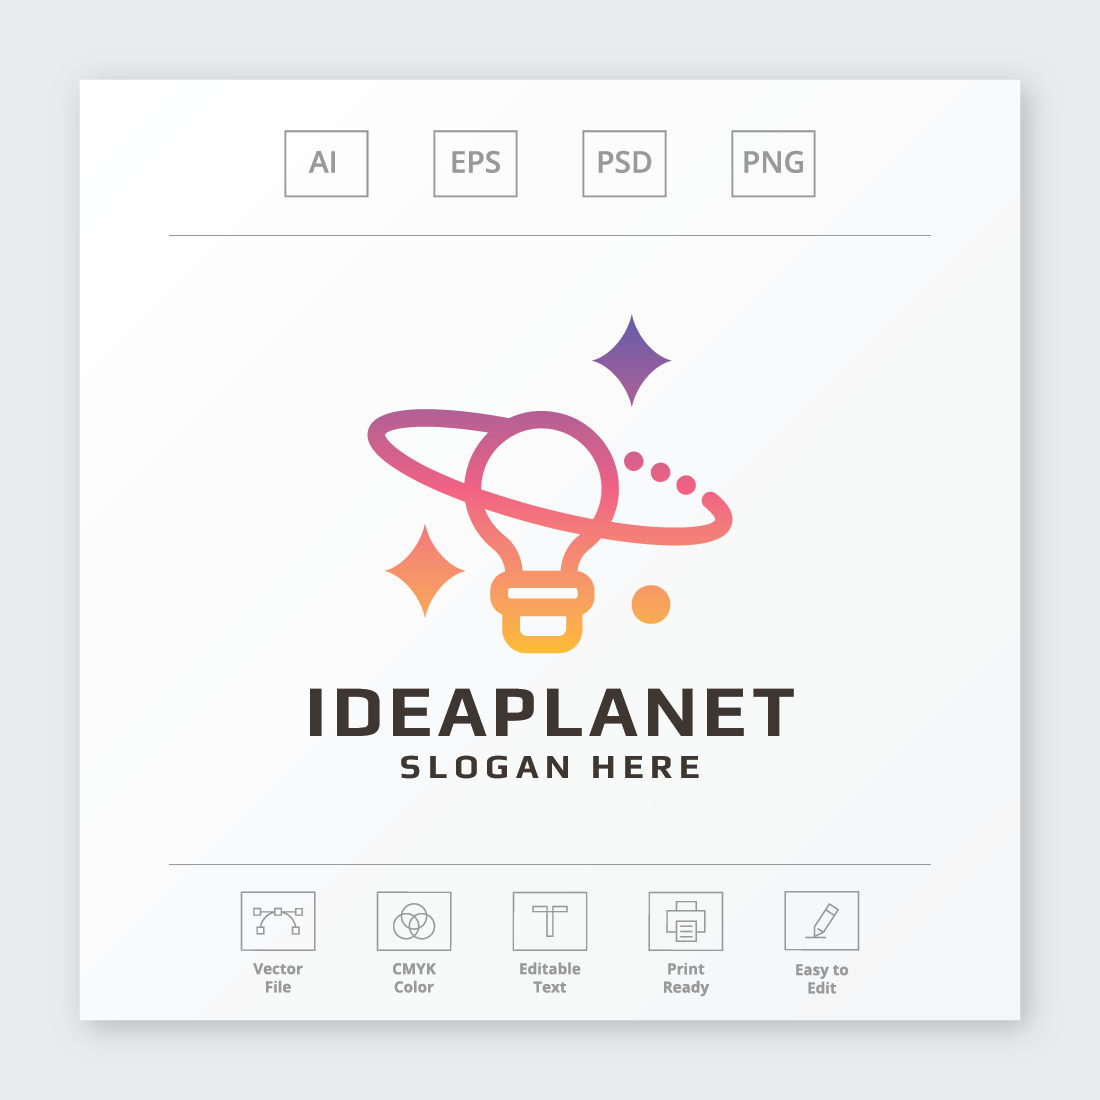 Idea Planet Professional Logo preview image.